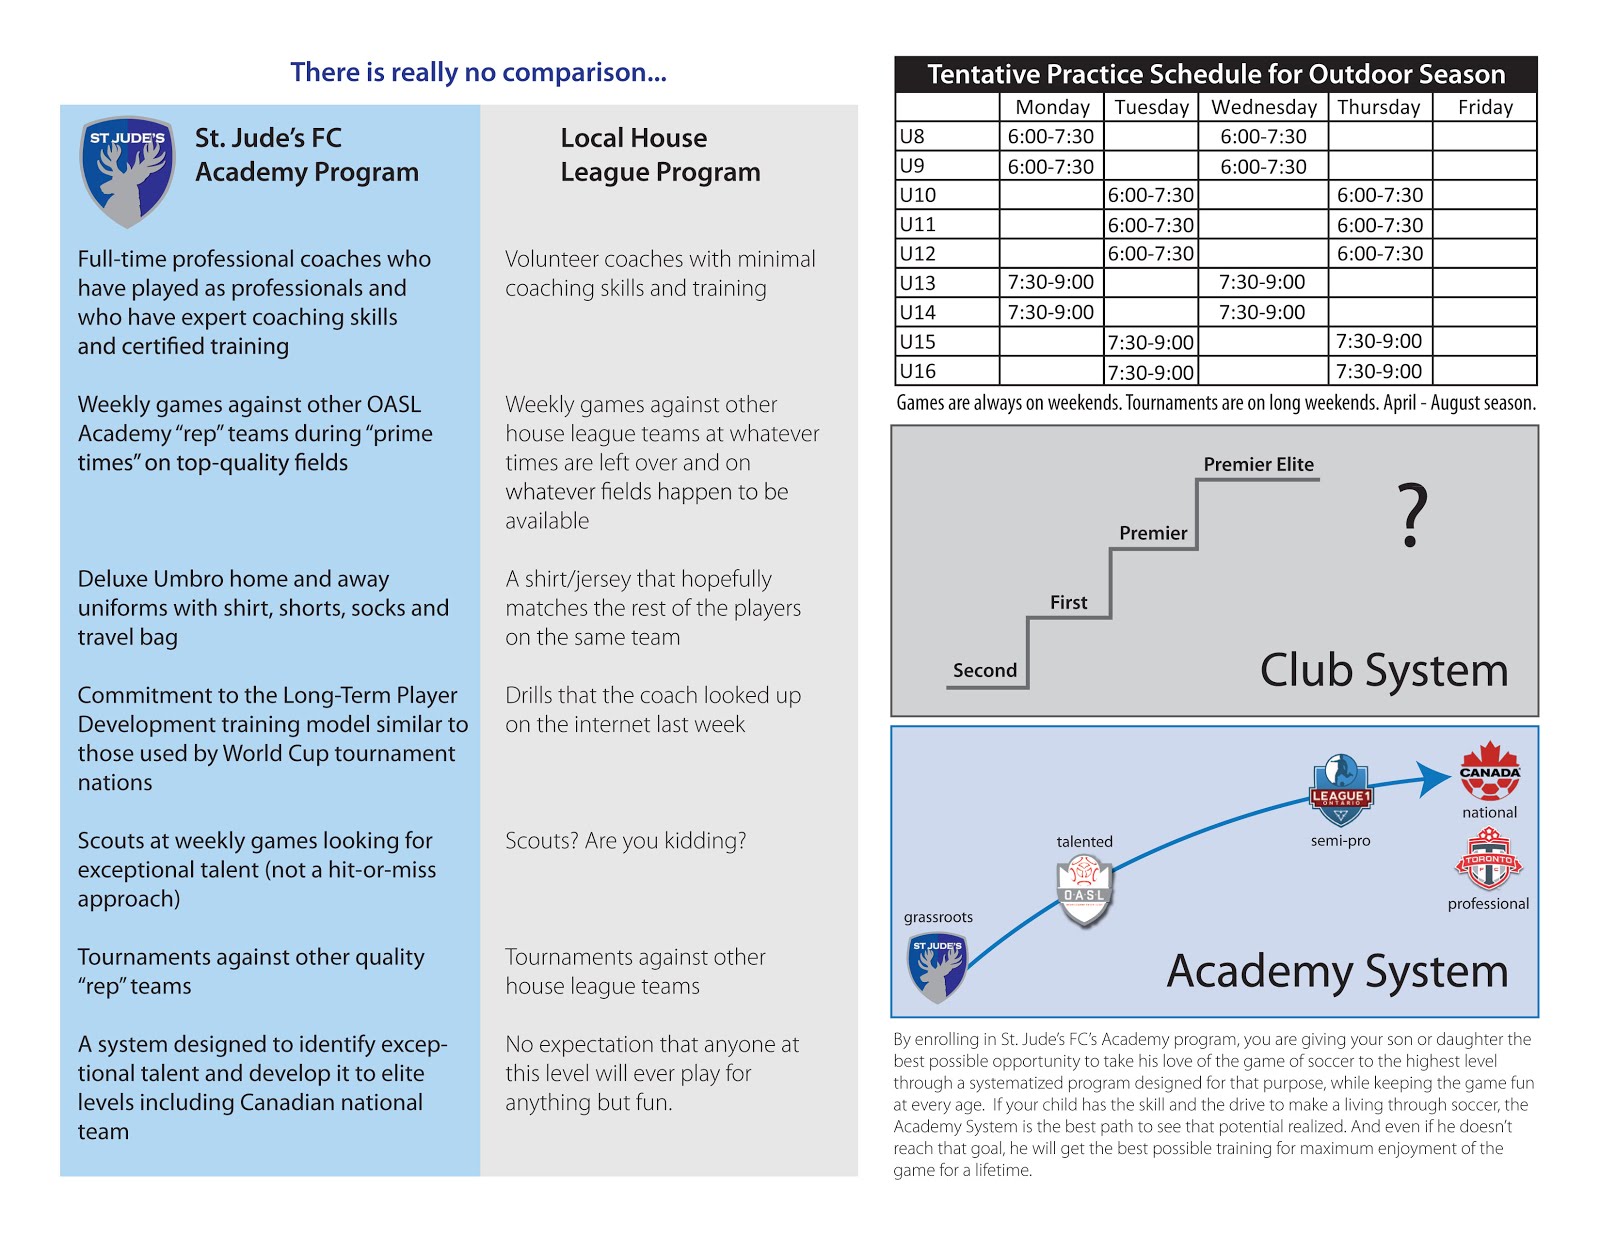 St. Jude's FC Academy Program